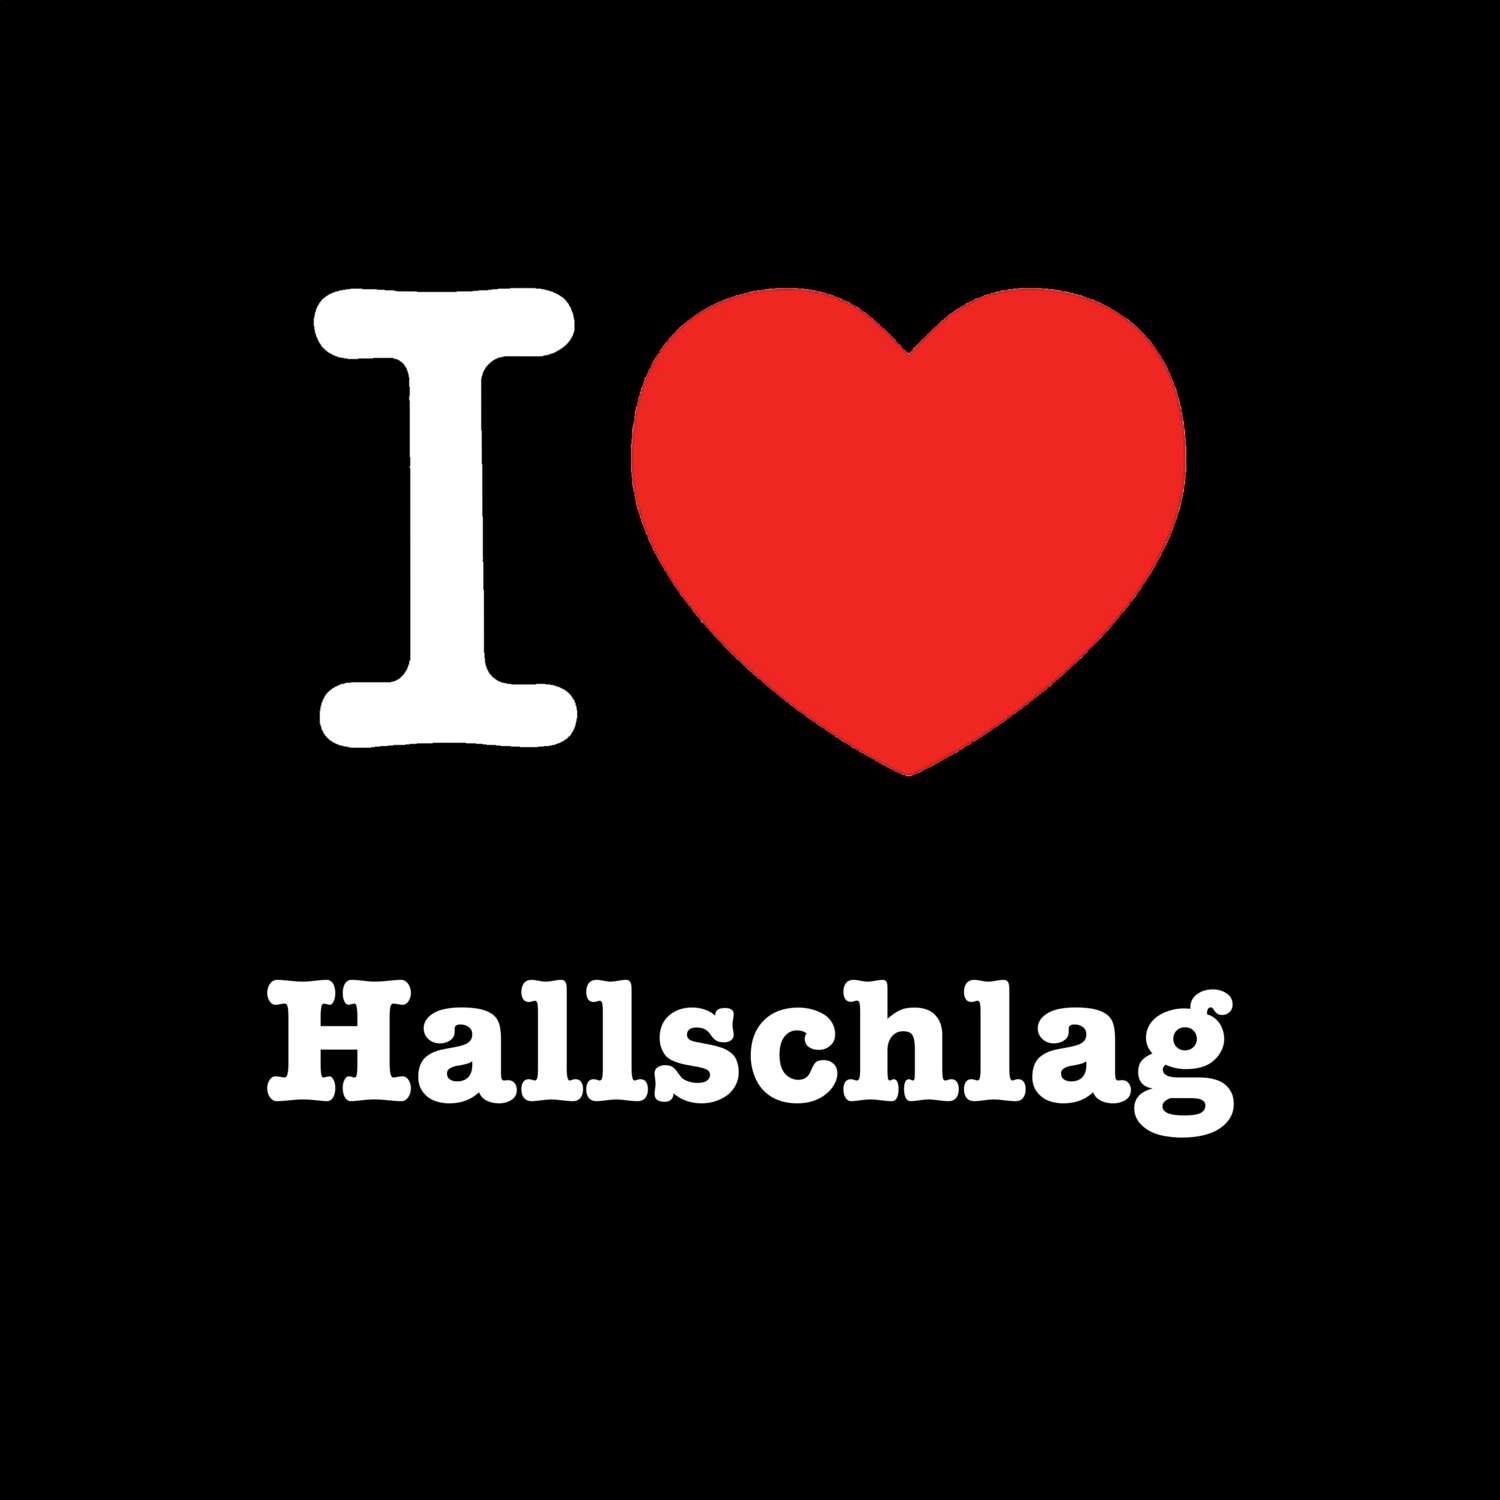 Hallschlag T-Shirt »I love«